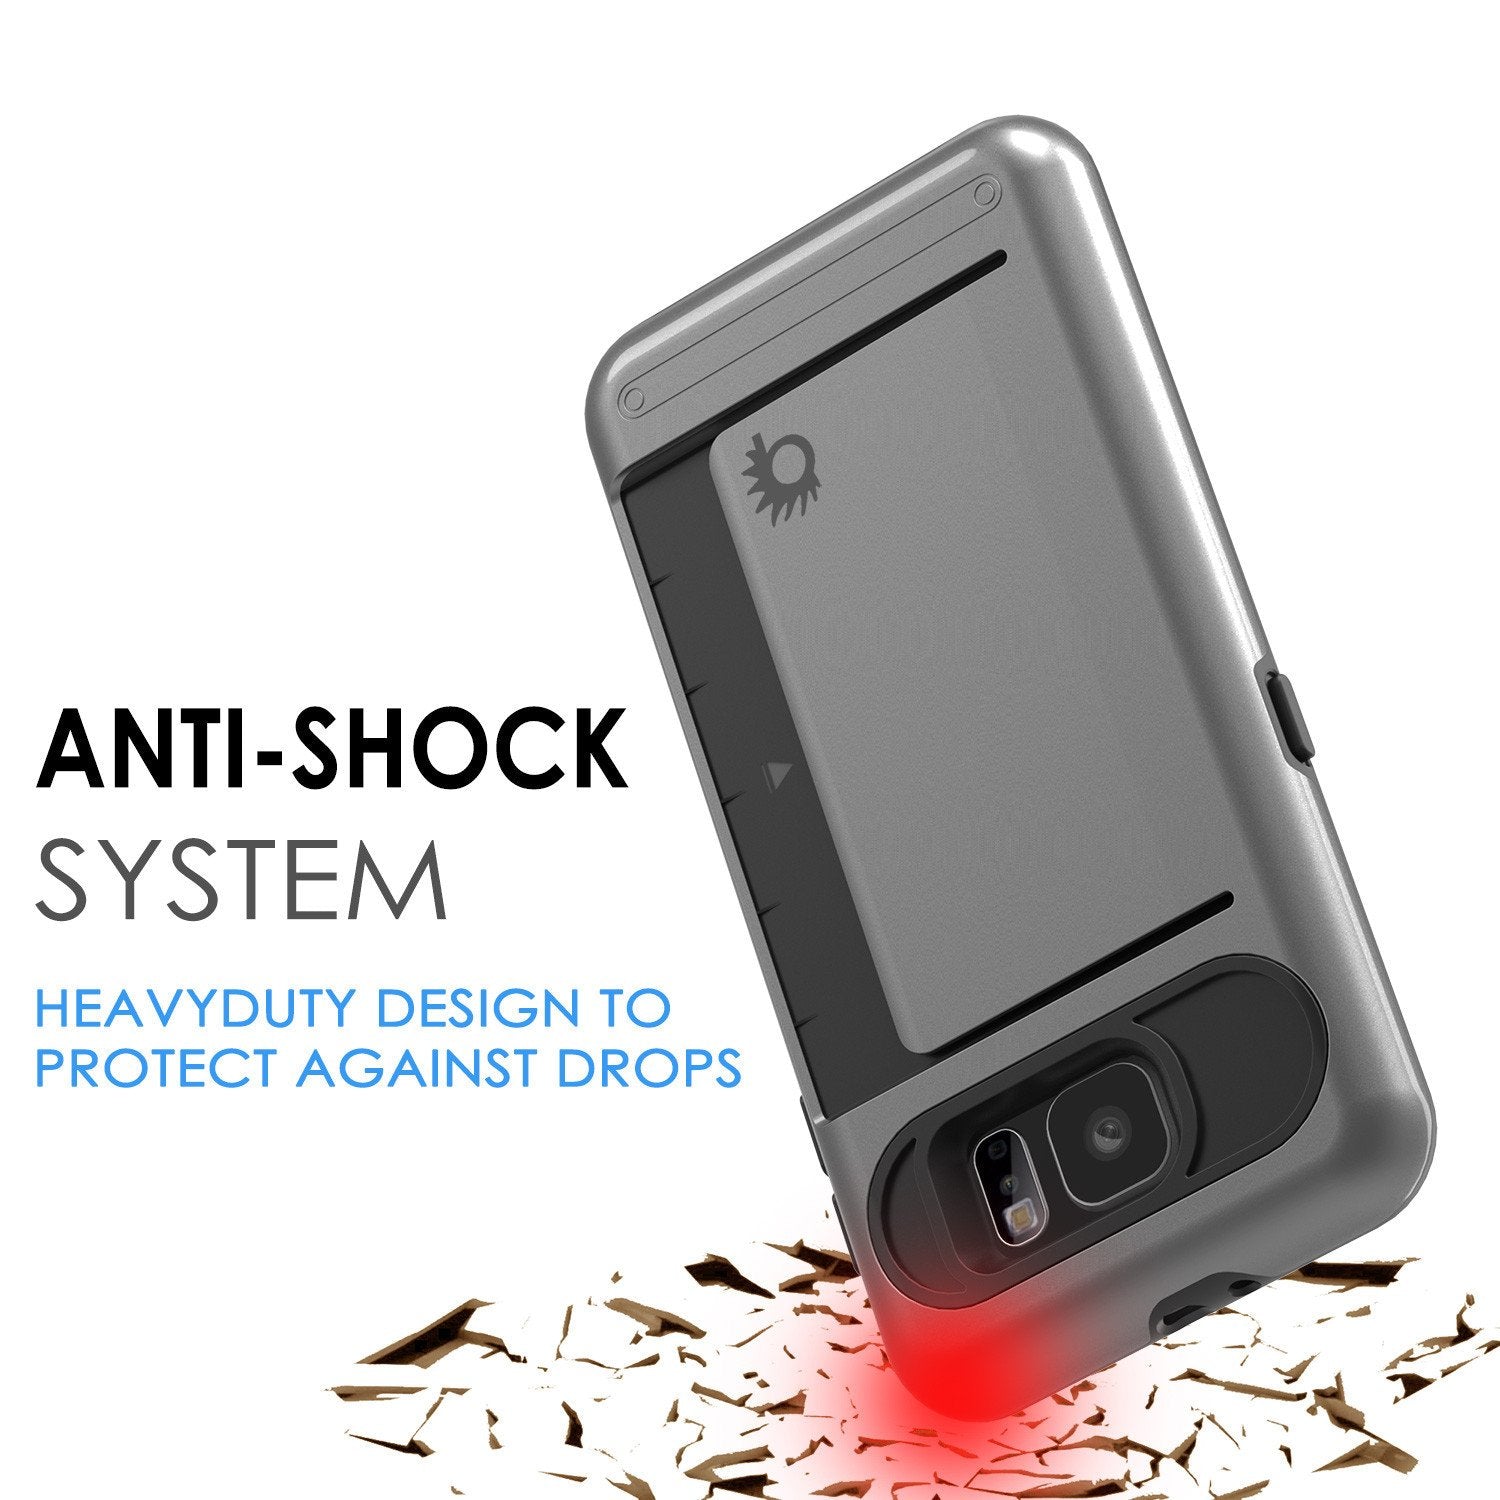 Galaxy S6 EDGE Plus Case PunkCase CLUTCH Grey Series Slim Armor Soft Cover Case w/ Screen Protector - PunkCase NZ